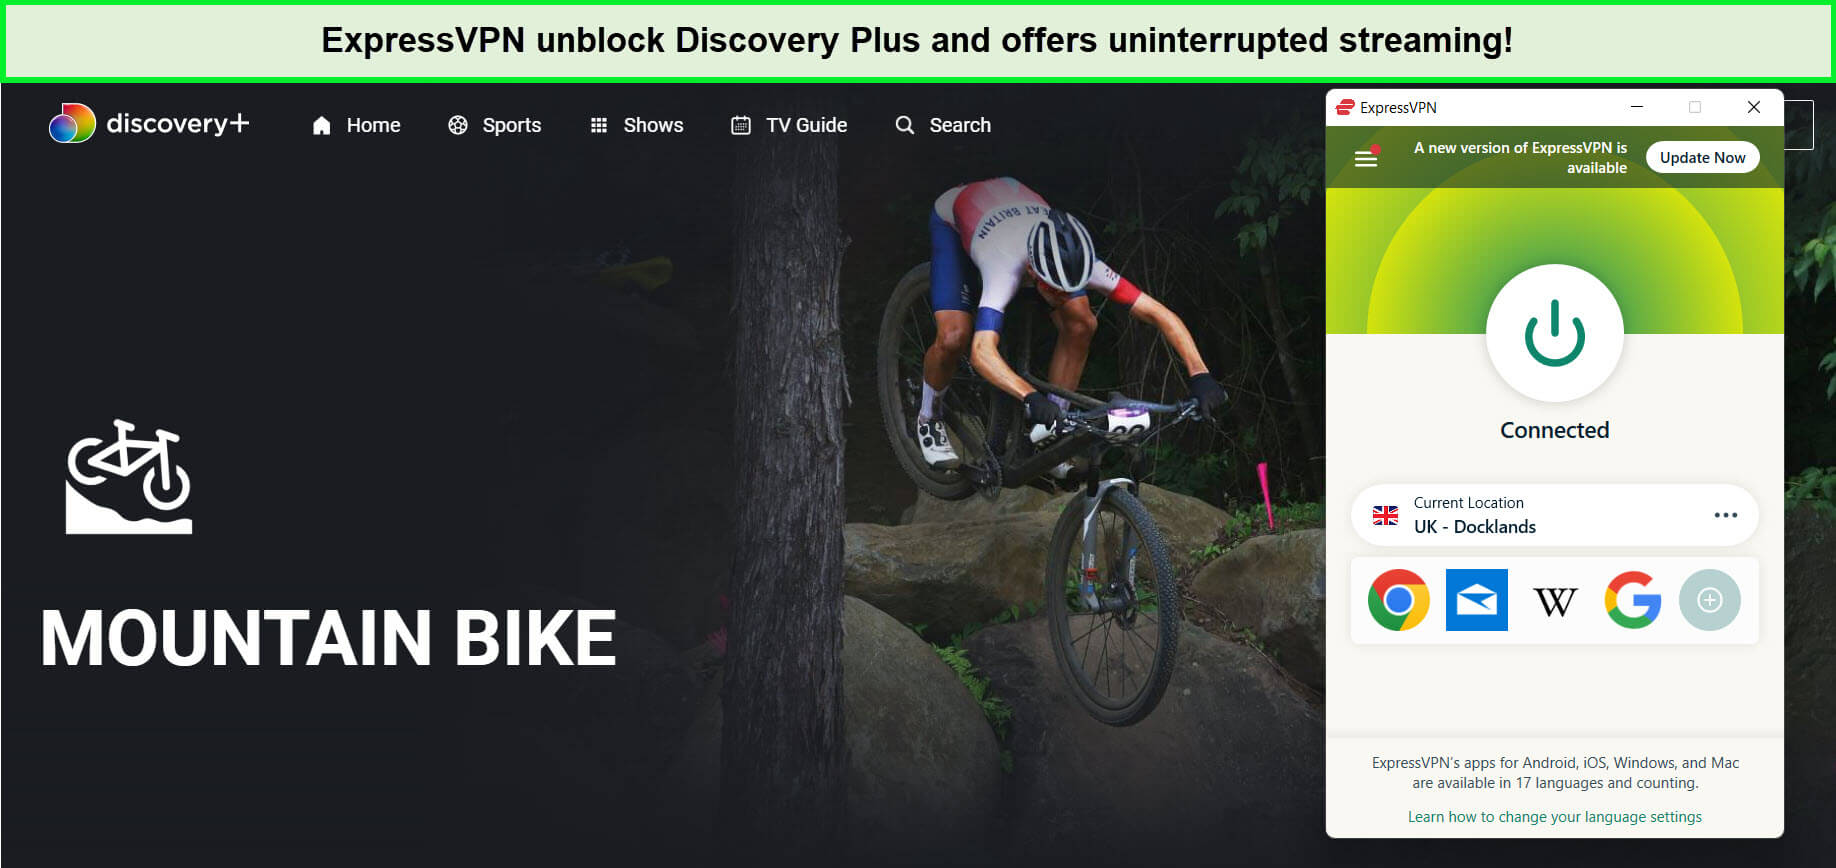 expressvpn-unblocks-uci-mountain-bike-world-series-in-India-discovery-plus